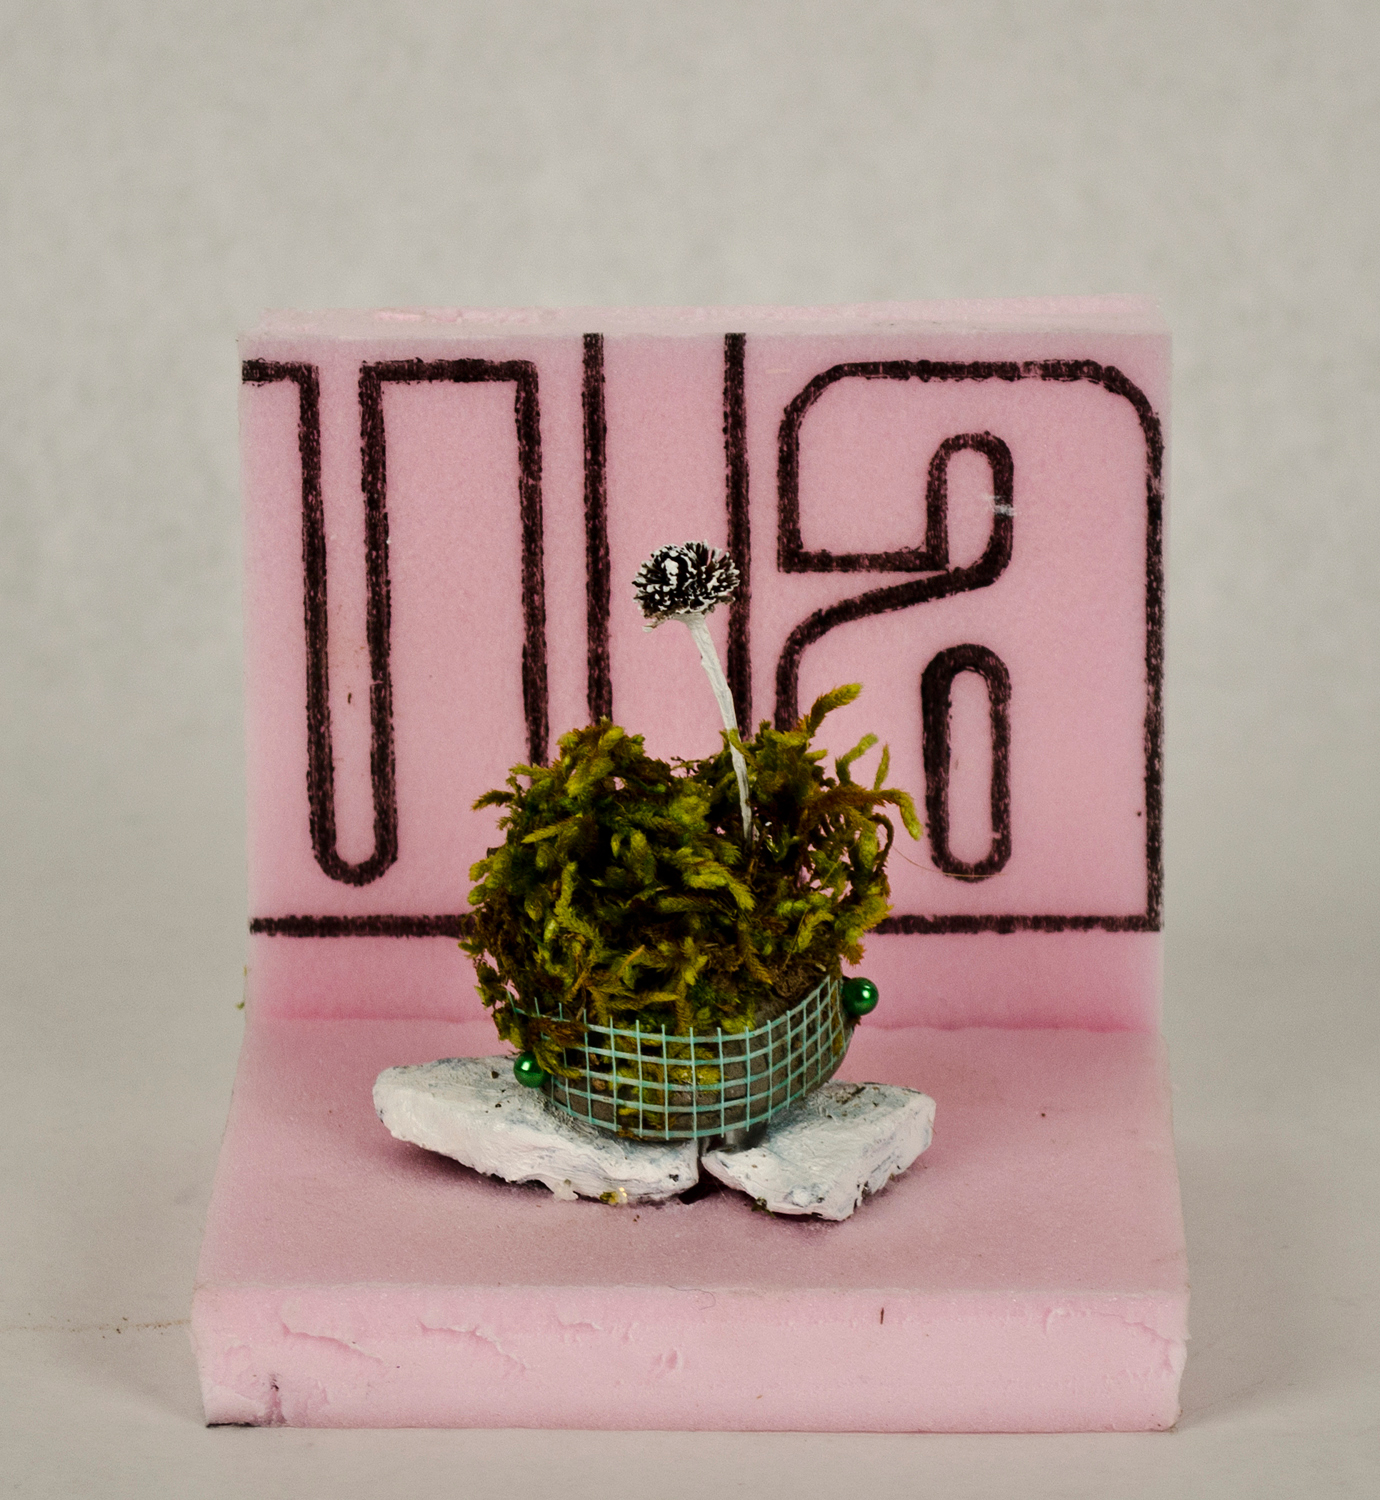 Jessica Lund, ula, 2014. Foam, gravel, drywall tape, moss, flower, gravel, pins, paint, 4 x 4 x 4 in.